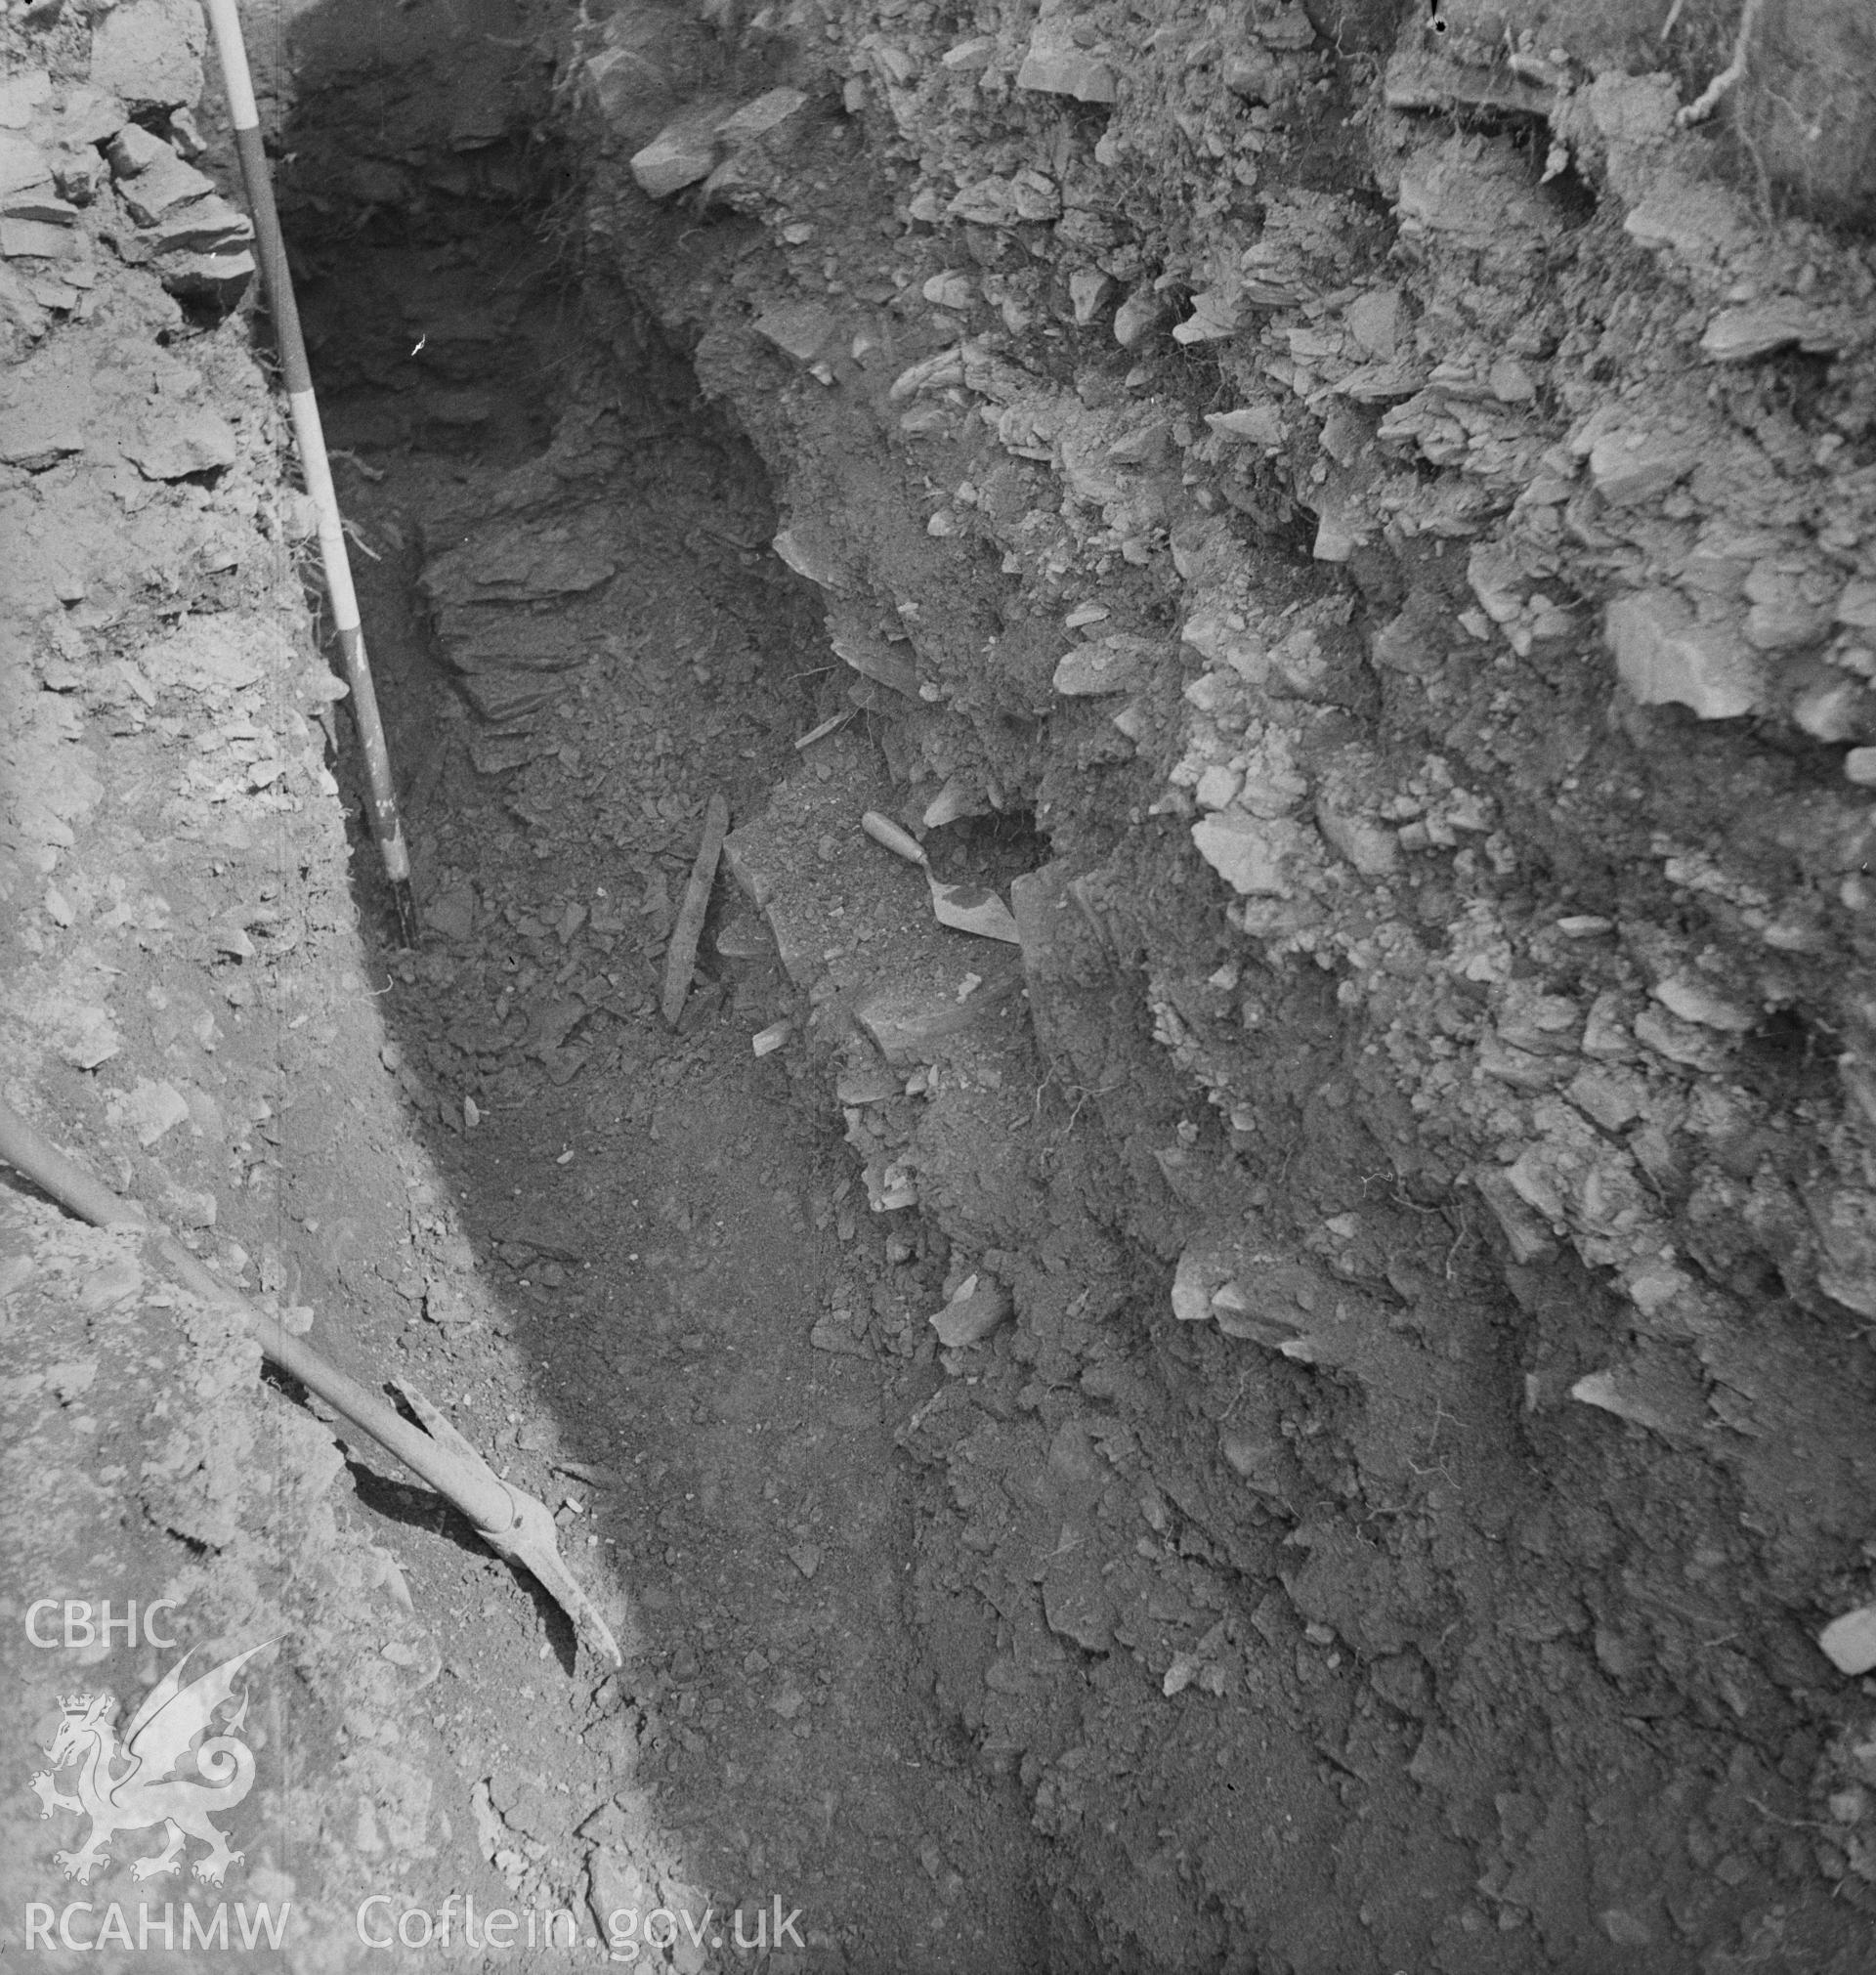 Excavation detail